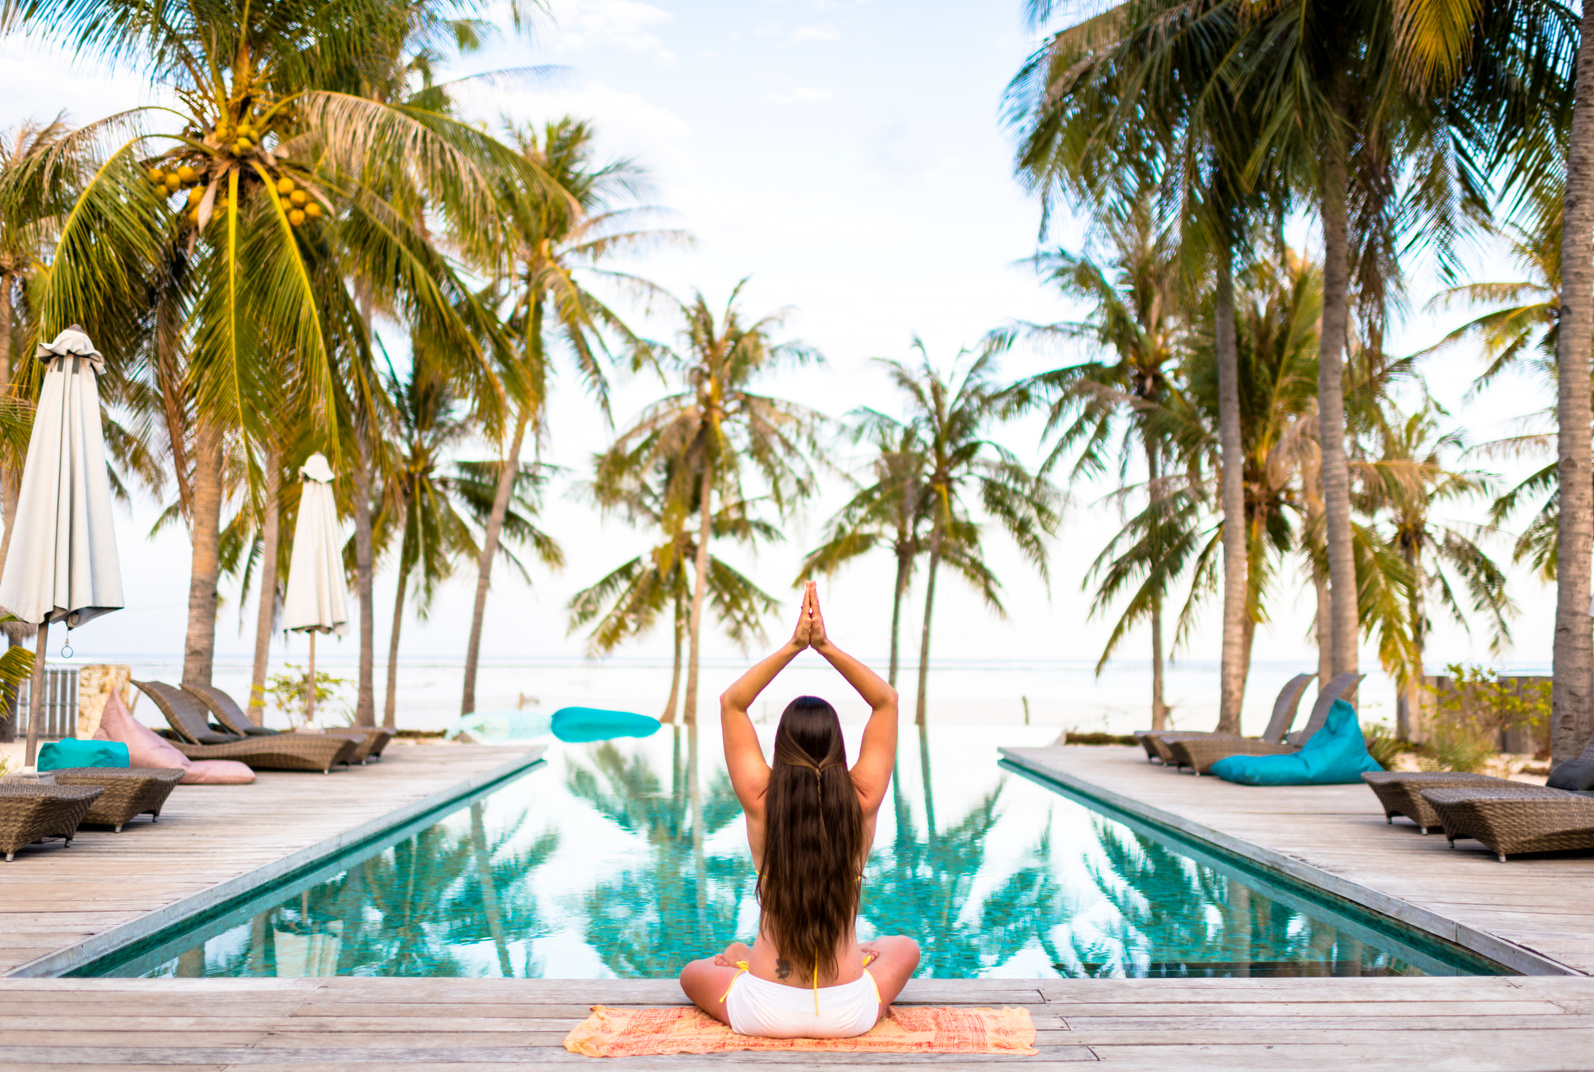 Find balance enjoying luxury island retreat